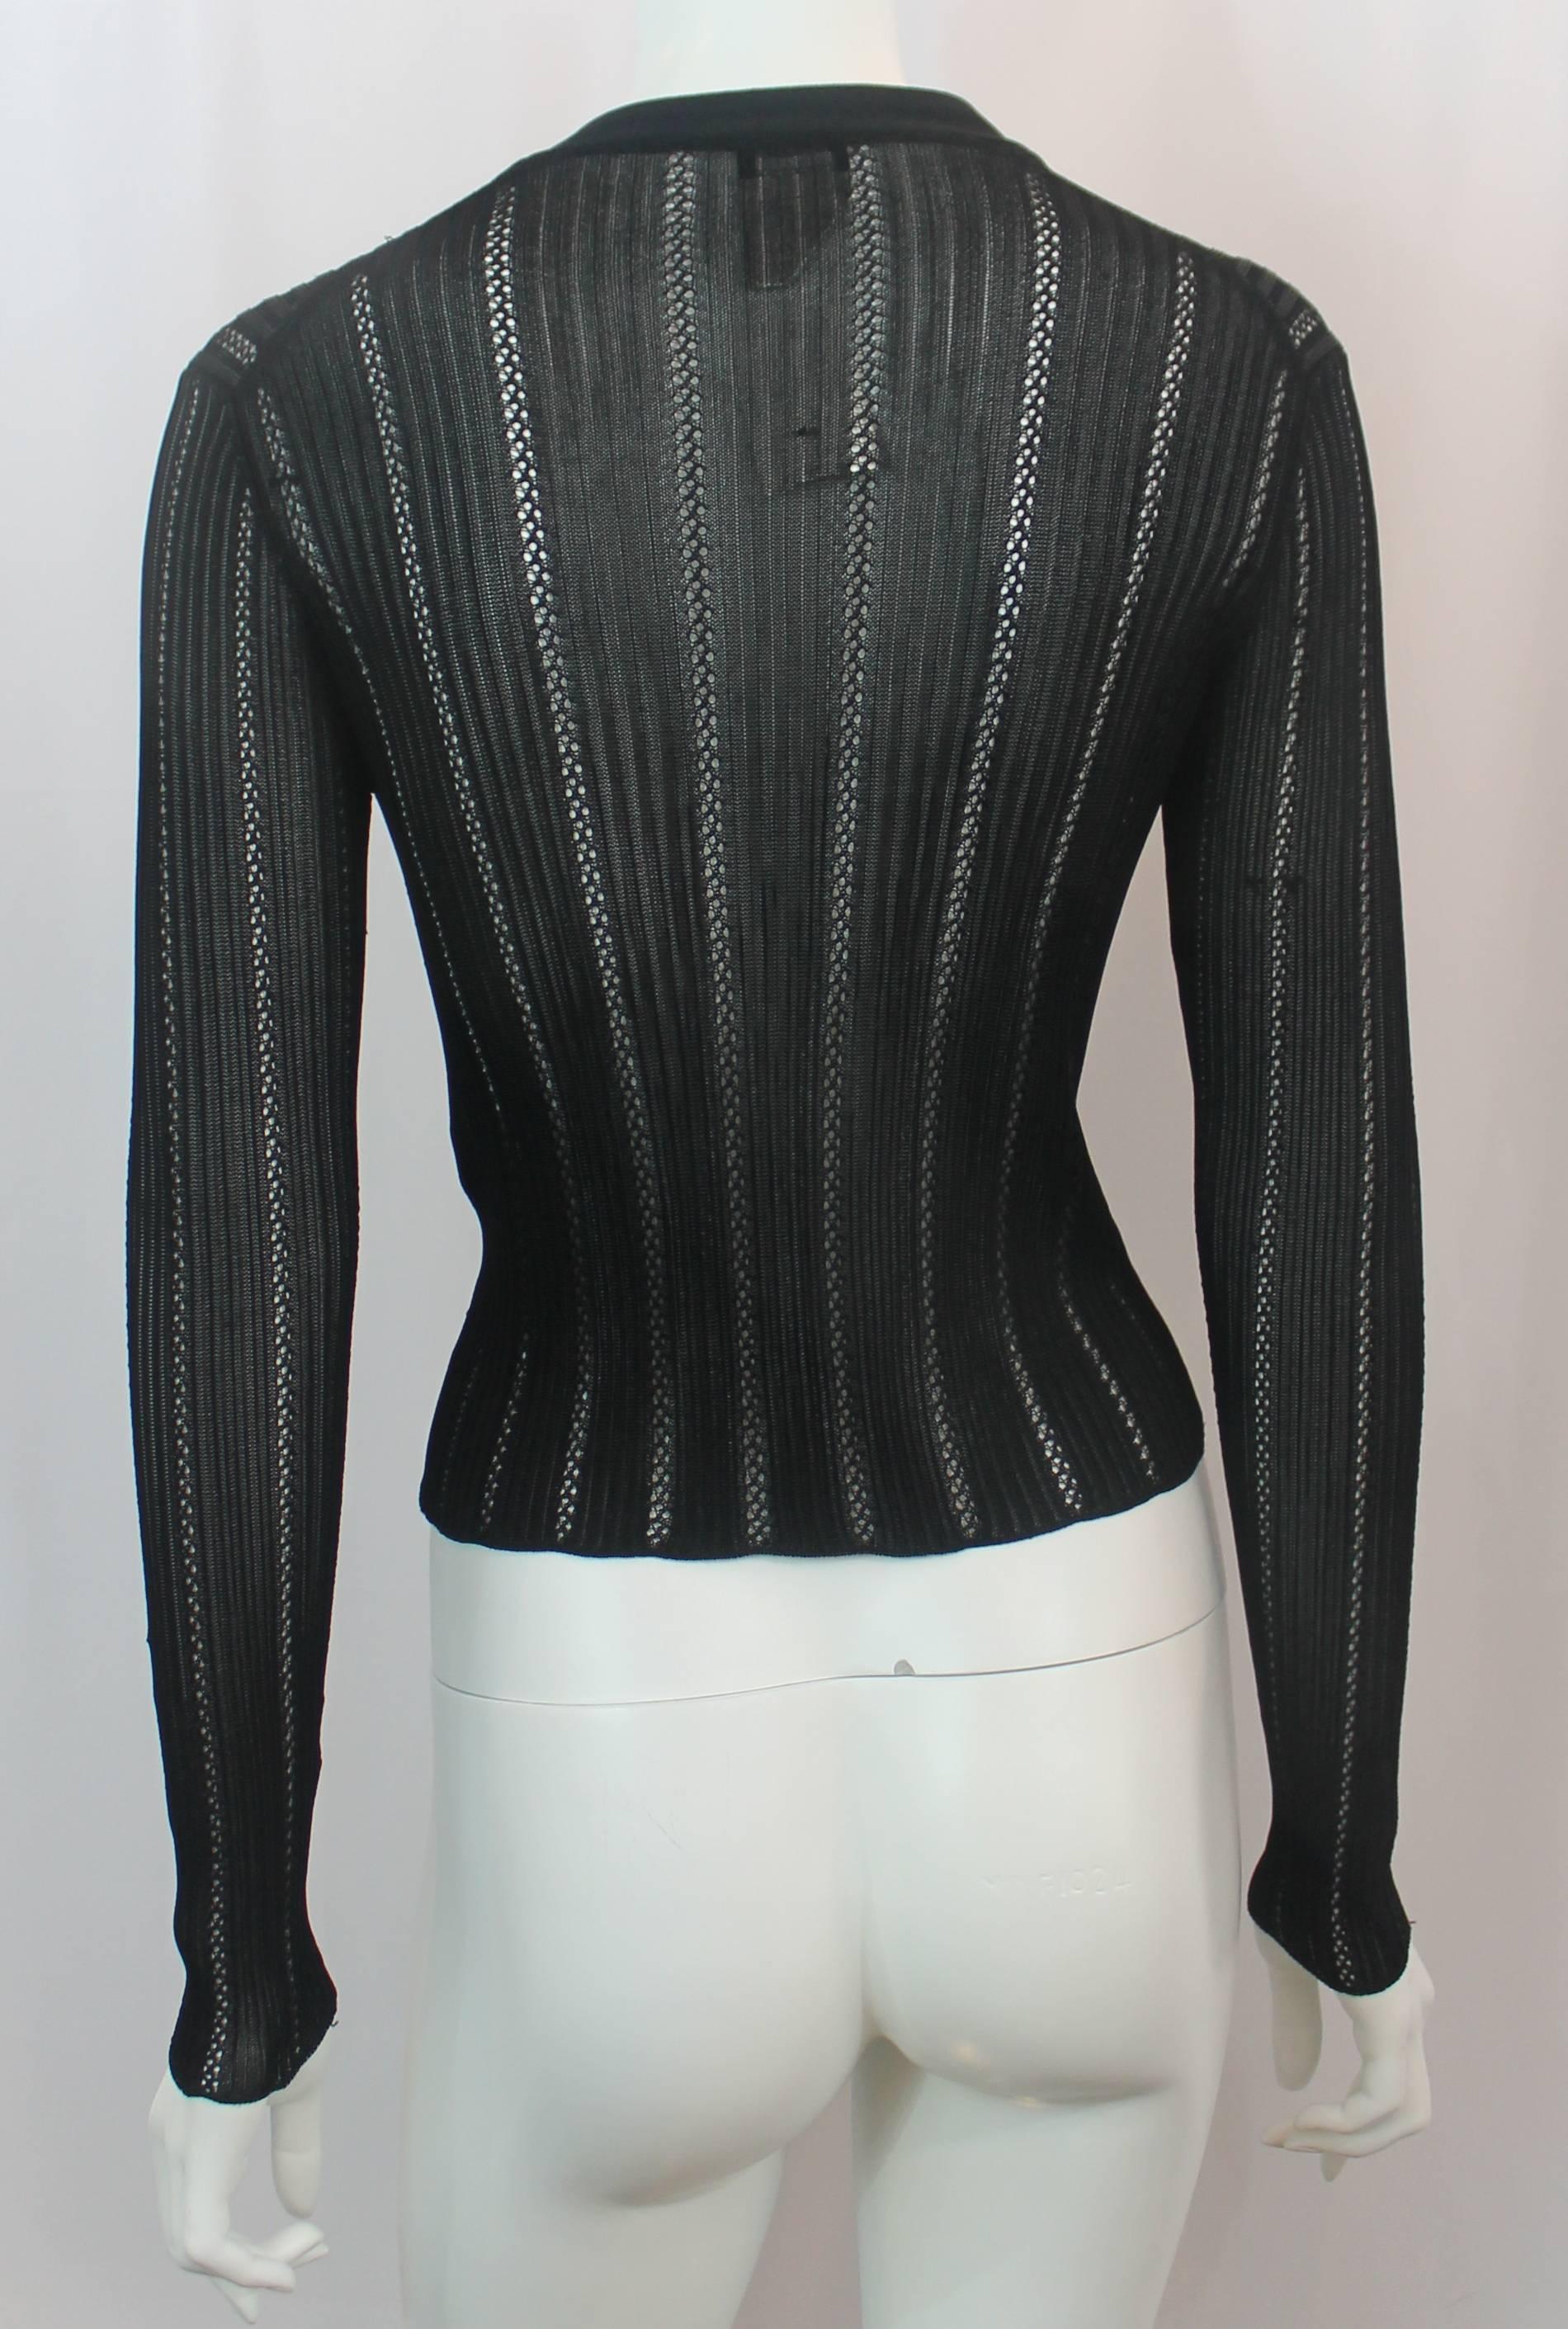 Women's Chanel Black Silk Knit Long Sleeve V-Neck Light Cardigan - 36 - 1990's